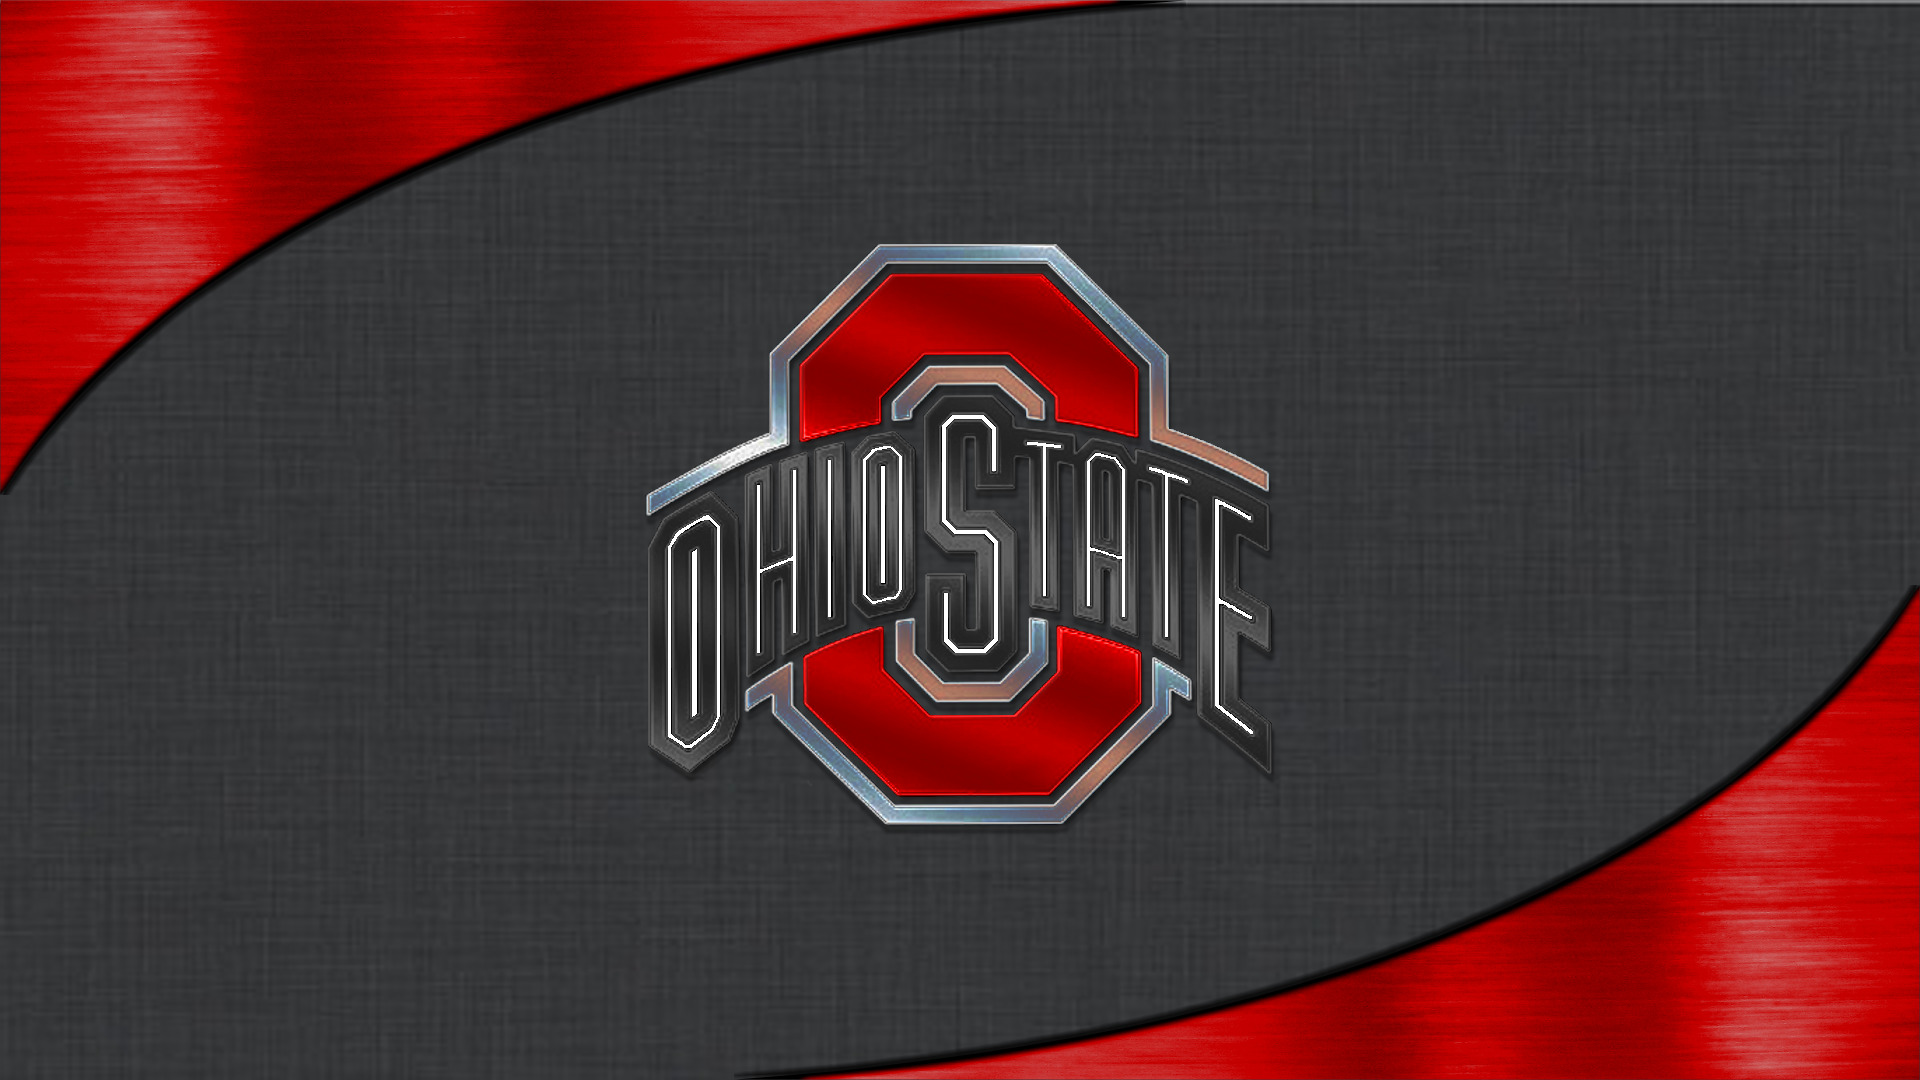 Ohio State Football Image Title Osu Wallpaper